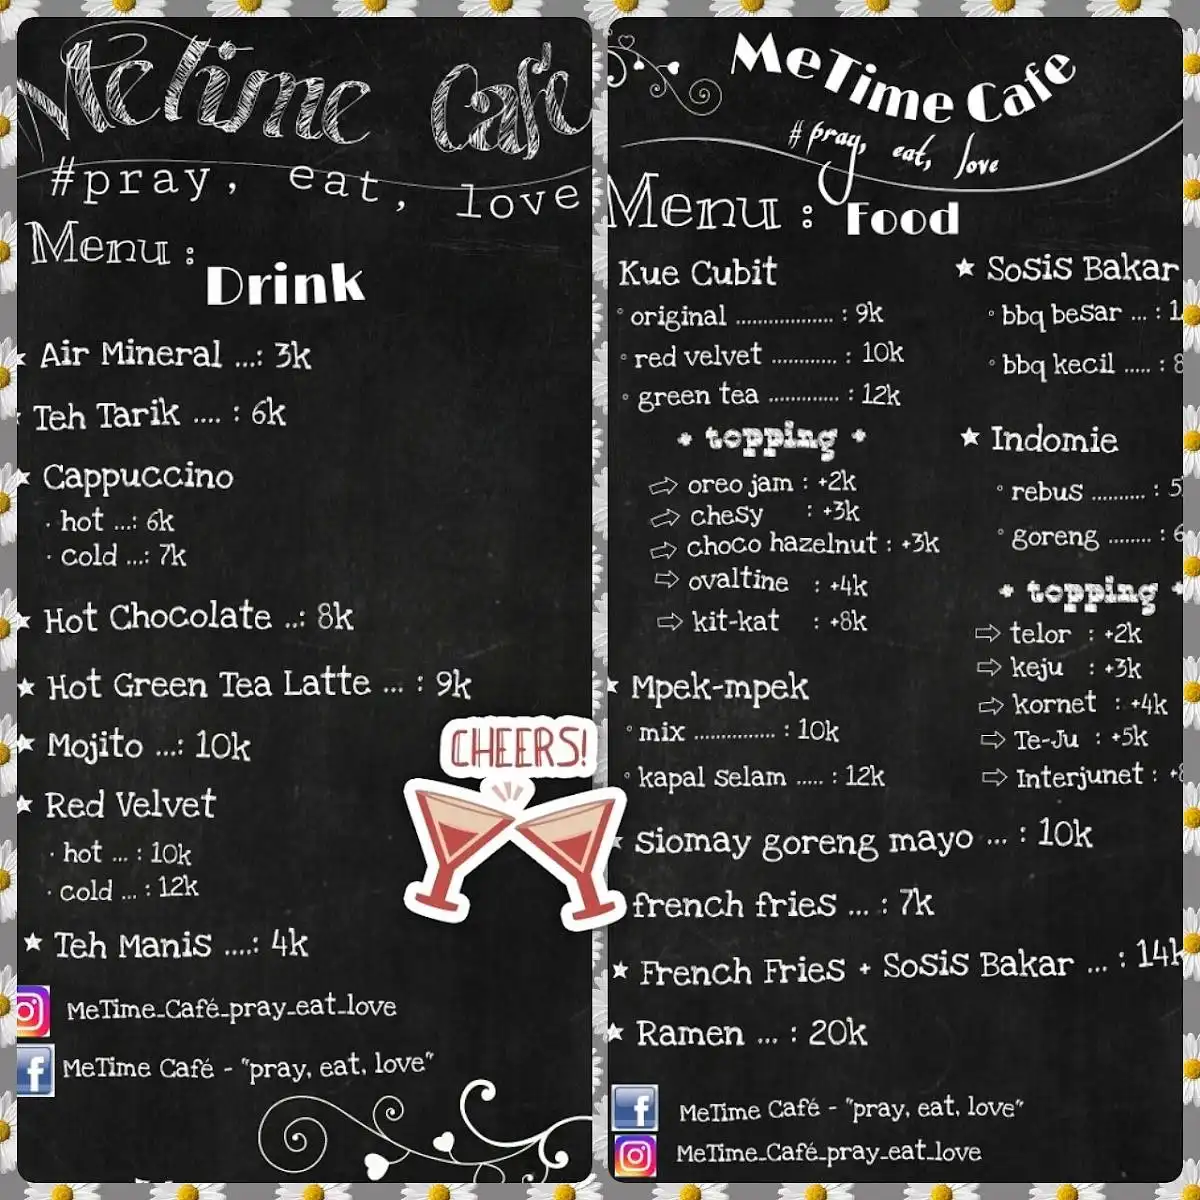 MeTime Cafe - # "pray, eat, love"